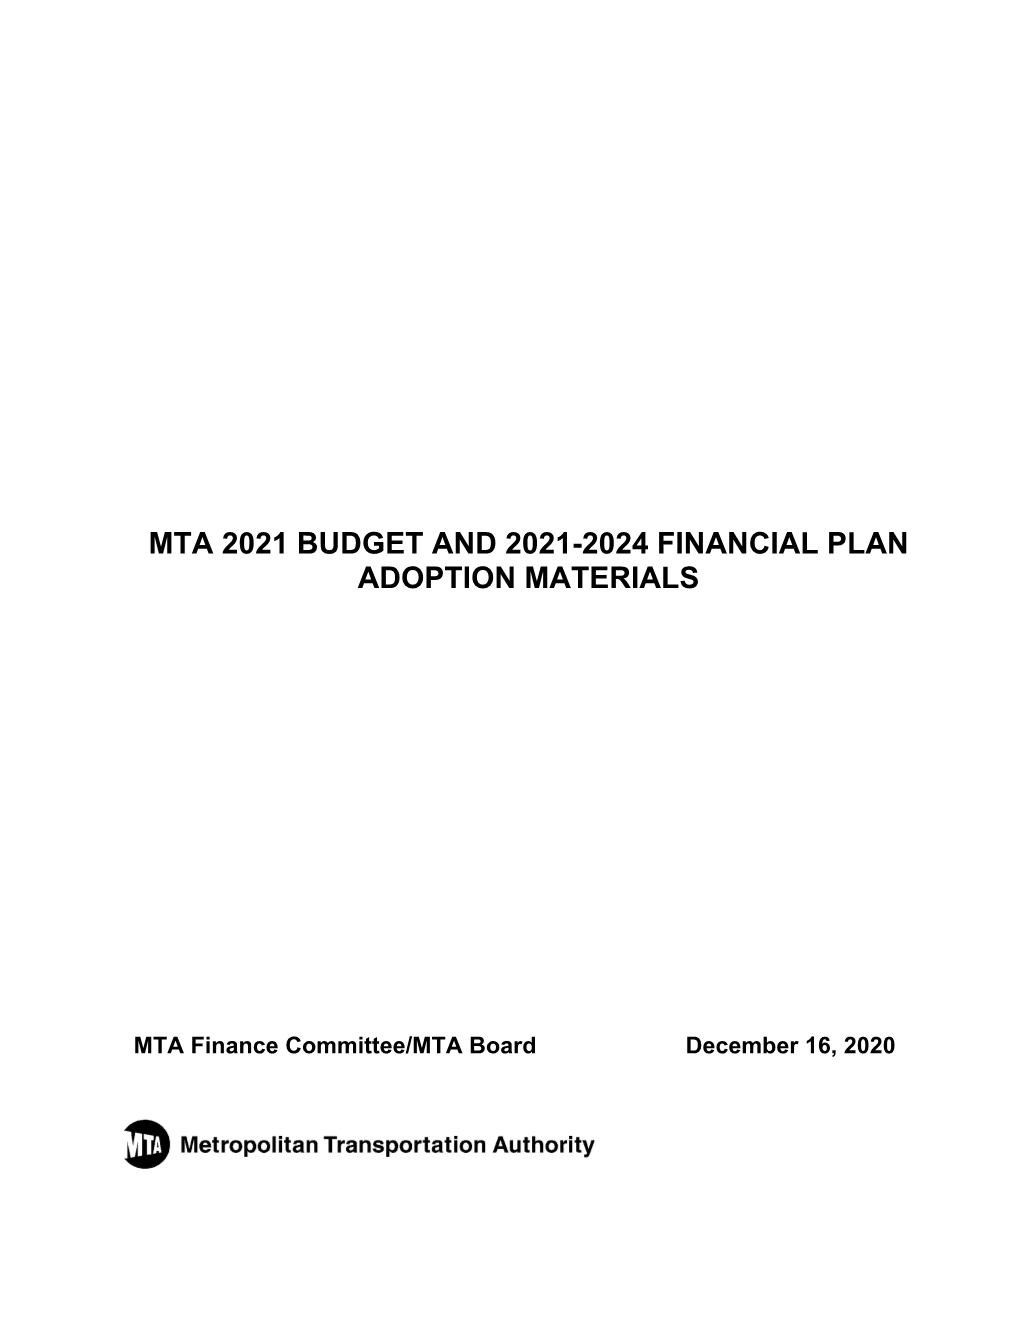 Mta 2021 Budget and 2021-2024 Financial Plan Adoption Materials